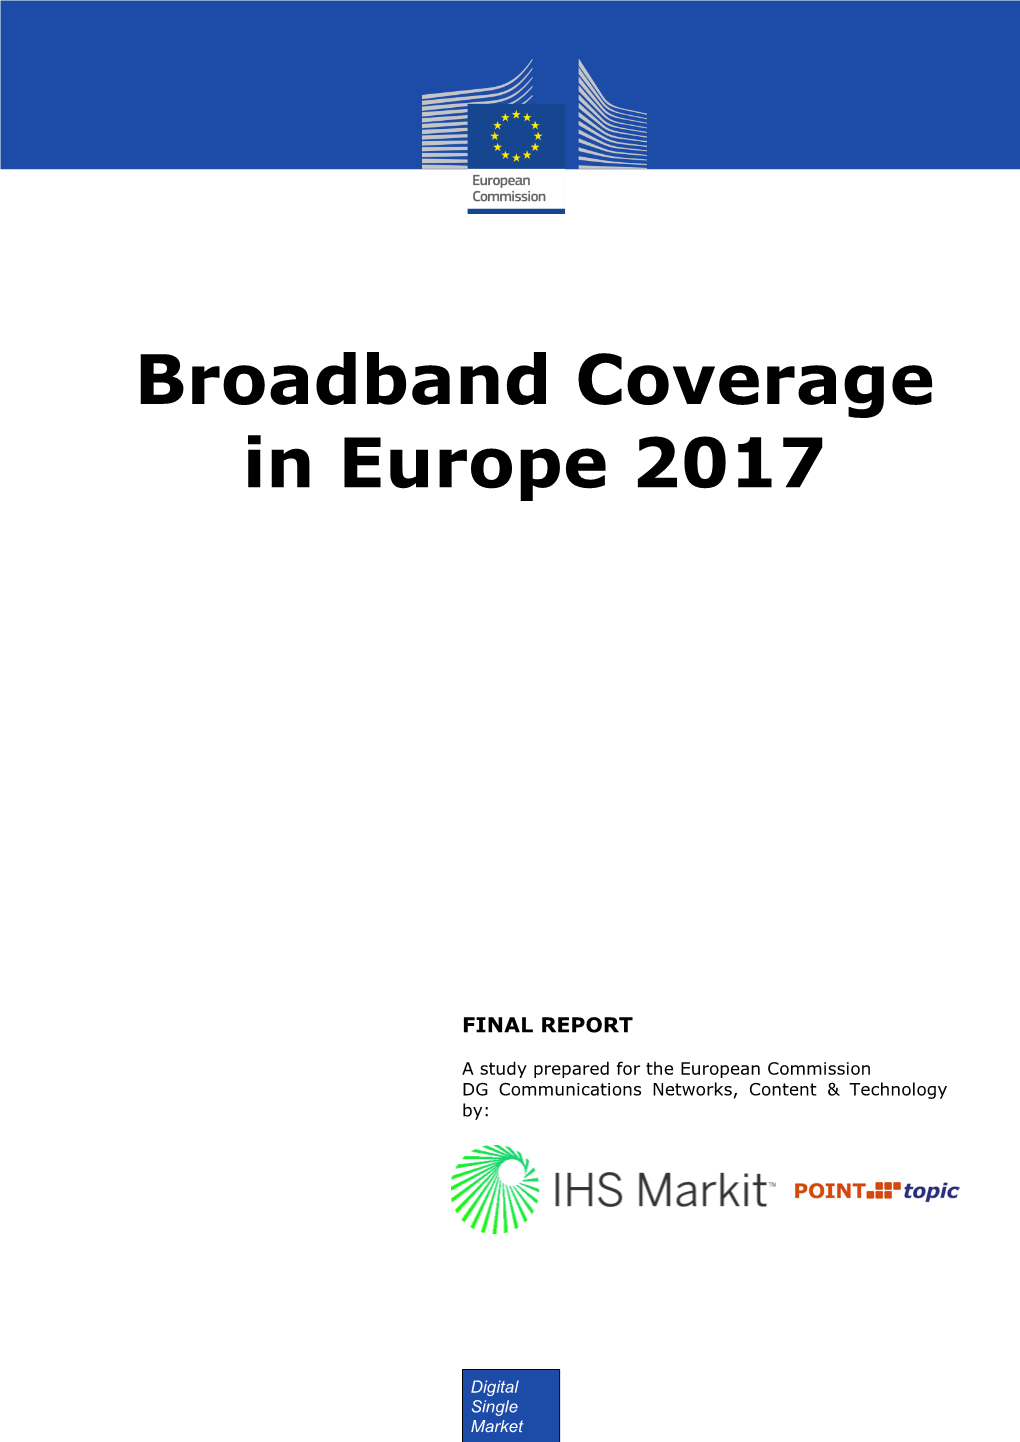 Broadband Coverage in Europe 2017